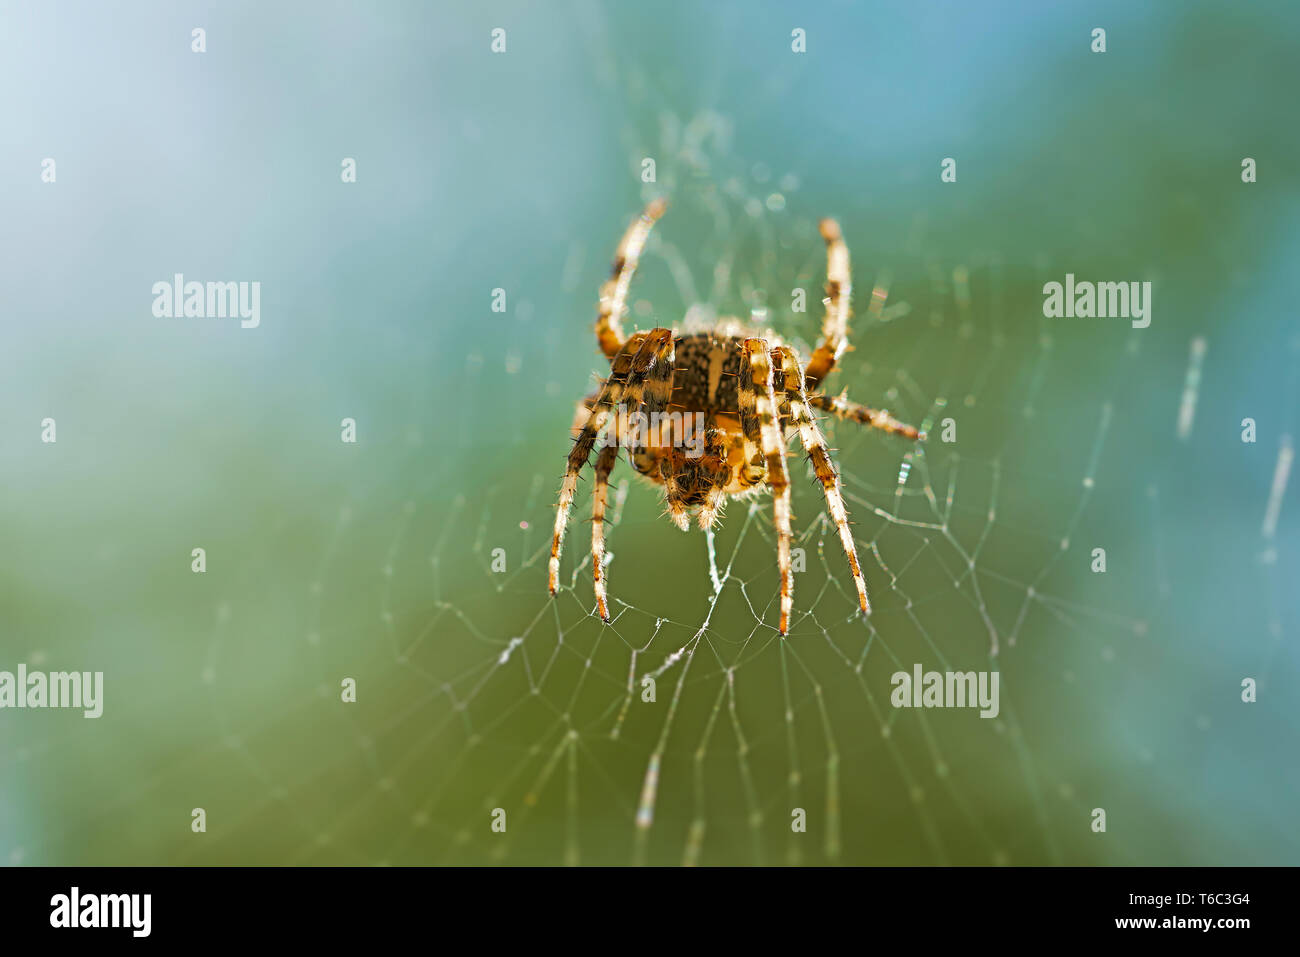 Cross araña en su web esperando presa Foto de stock